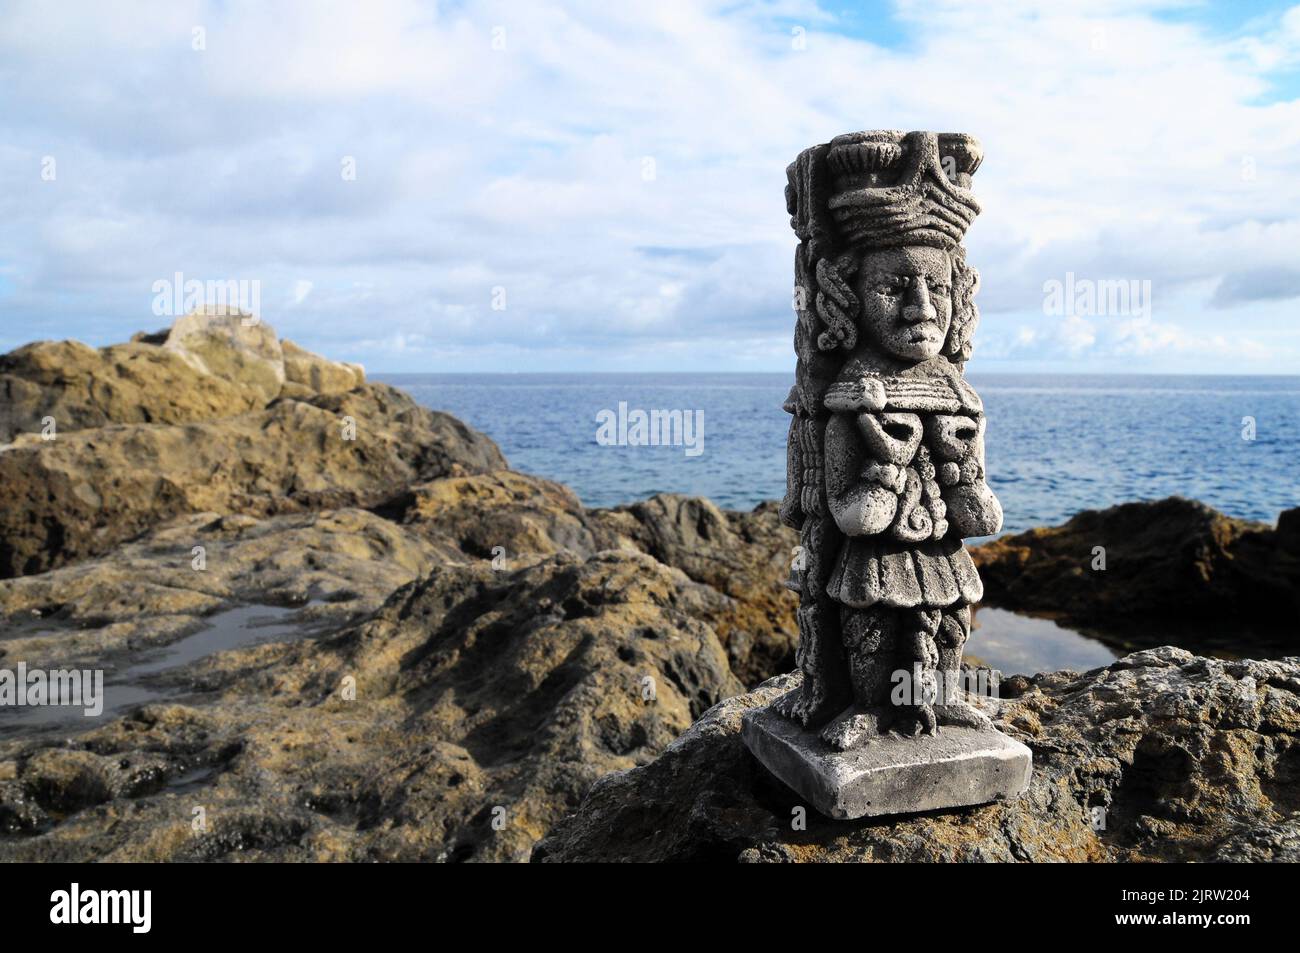 Ancient Maya Statue on the Rocks near Ocean Stock Photo